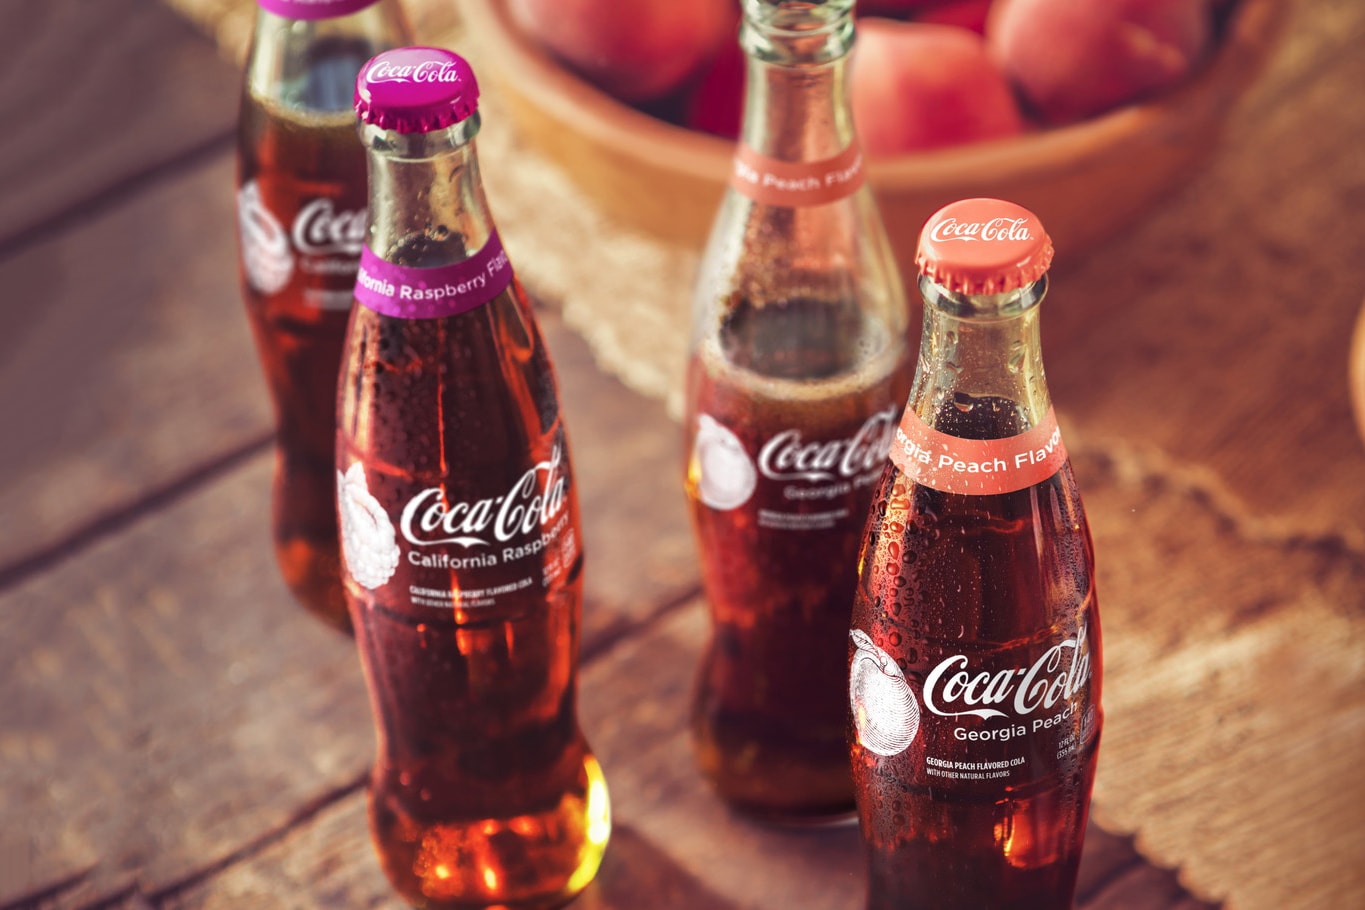 Coca-Cola California Raspberry Georgia Peach Flavor Sodas